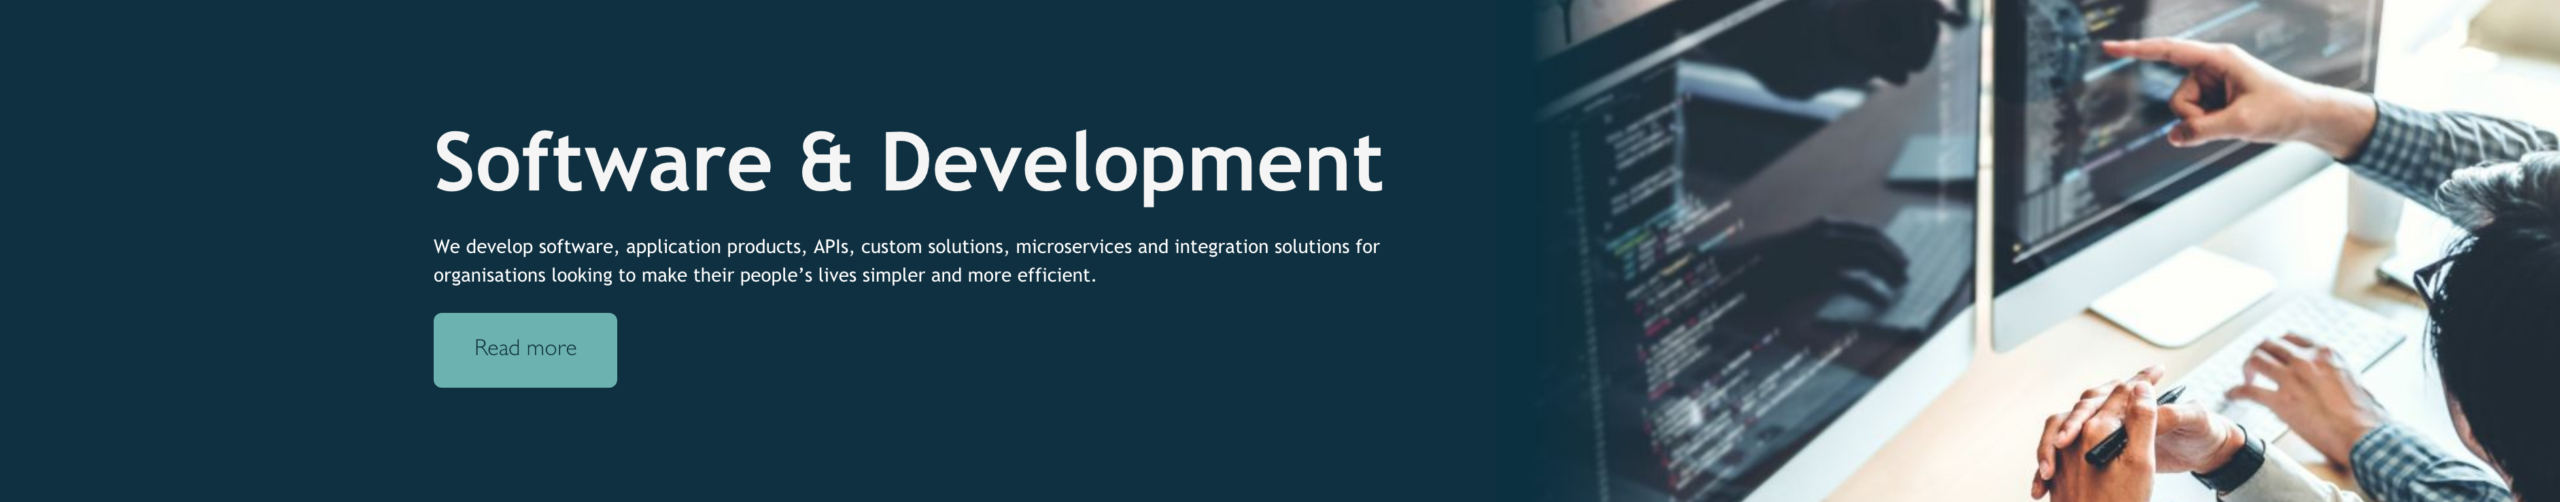 Software & Development Banner Image